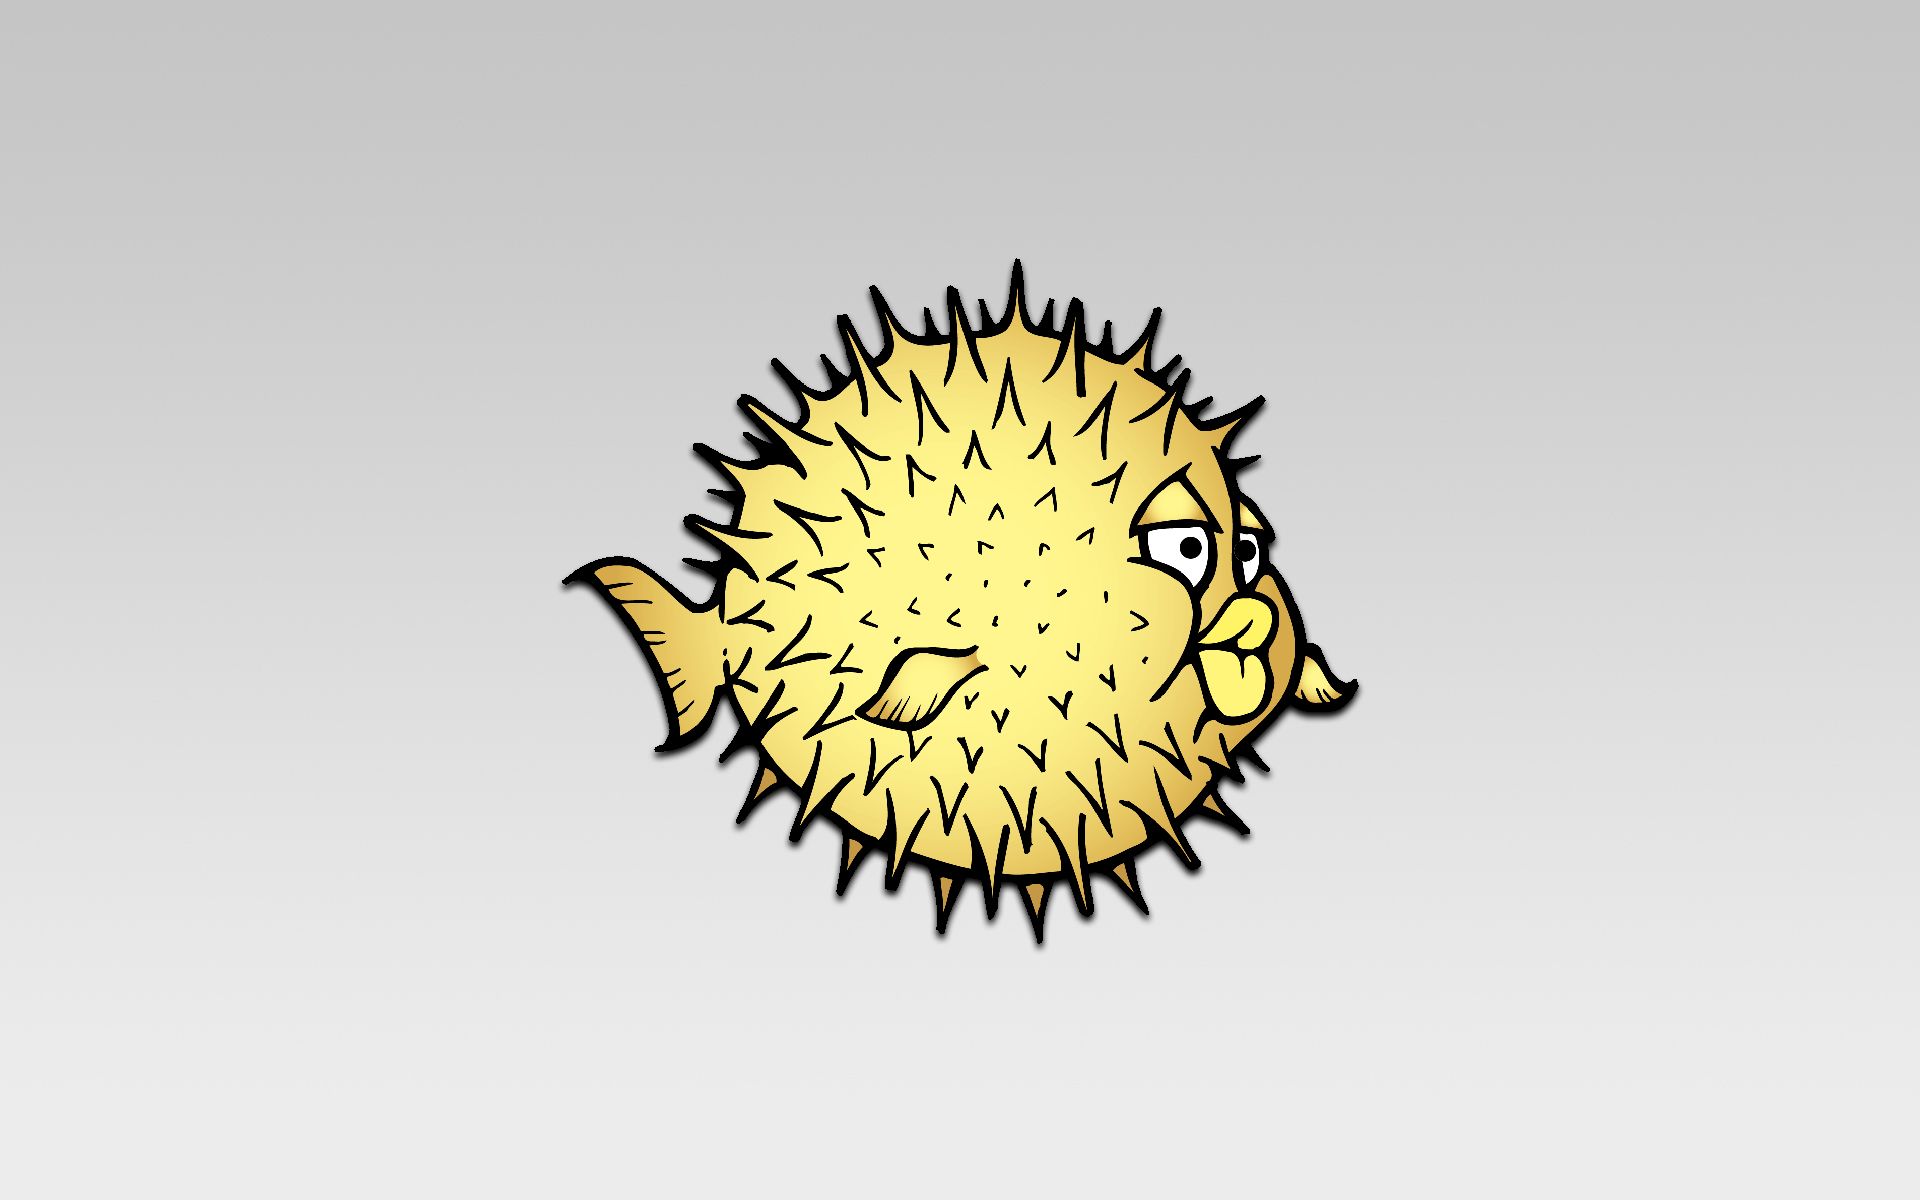 Download Wallpaper grey fish logo openbsd the blowfish pufferfish